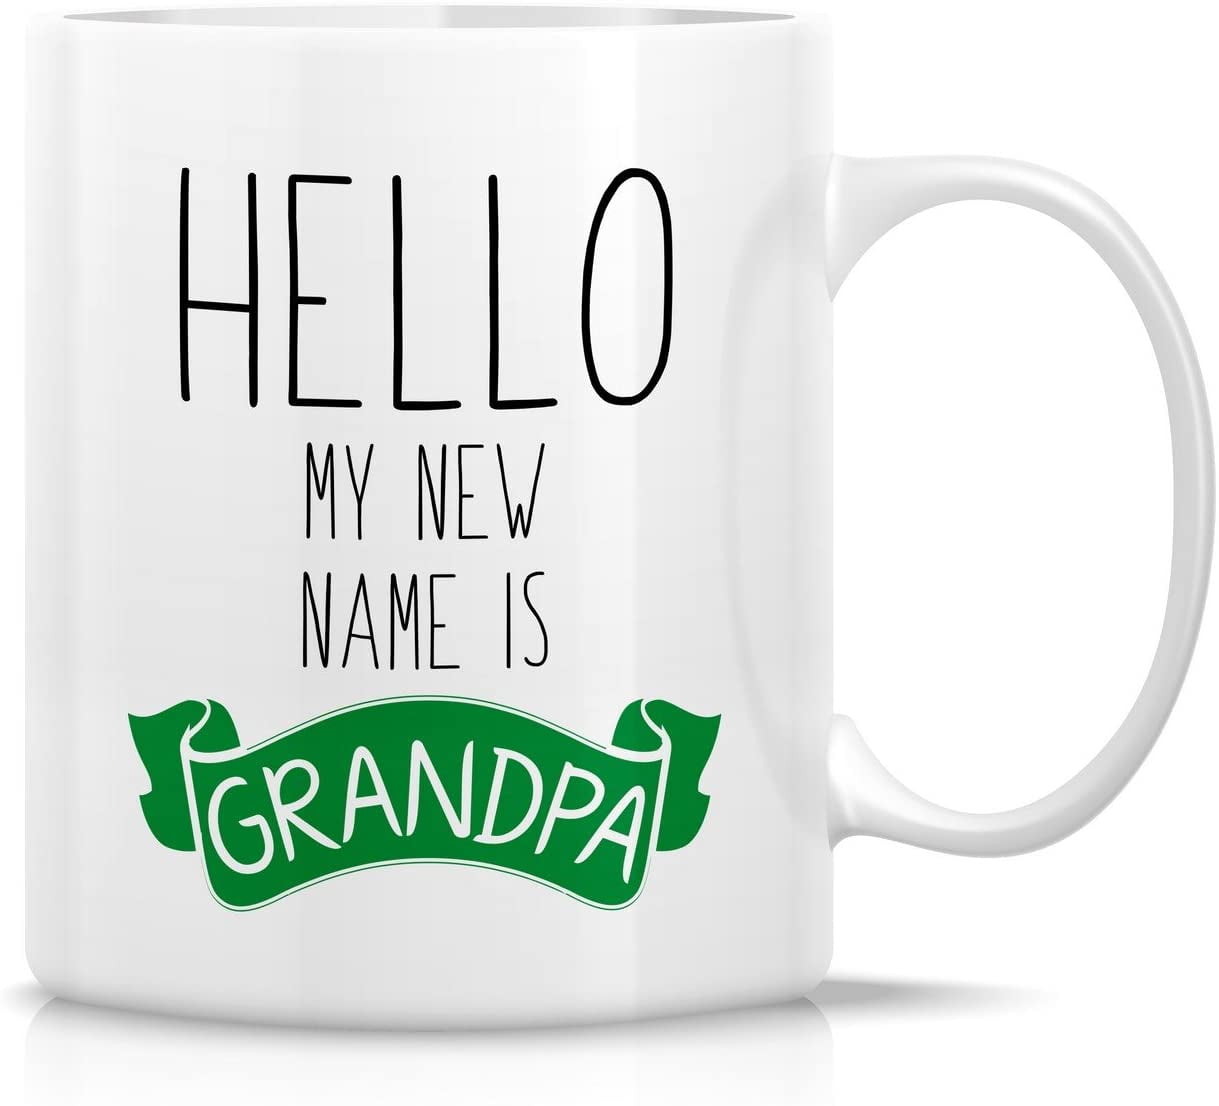 Top Grandad Mug Novelty Gift Birthday Present Idea Family